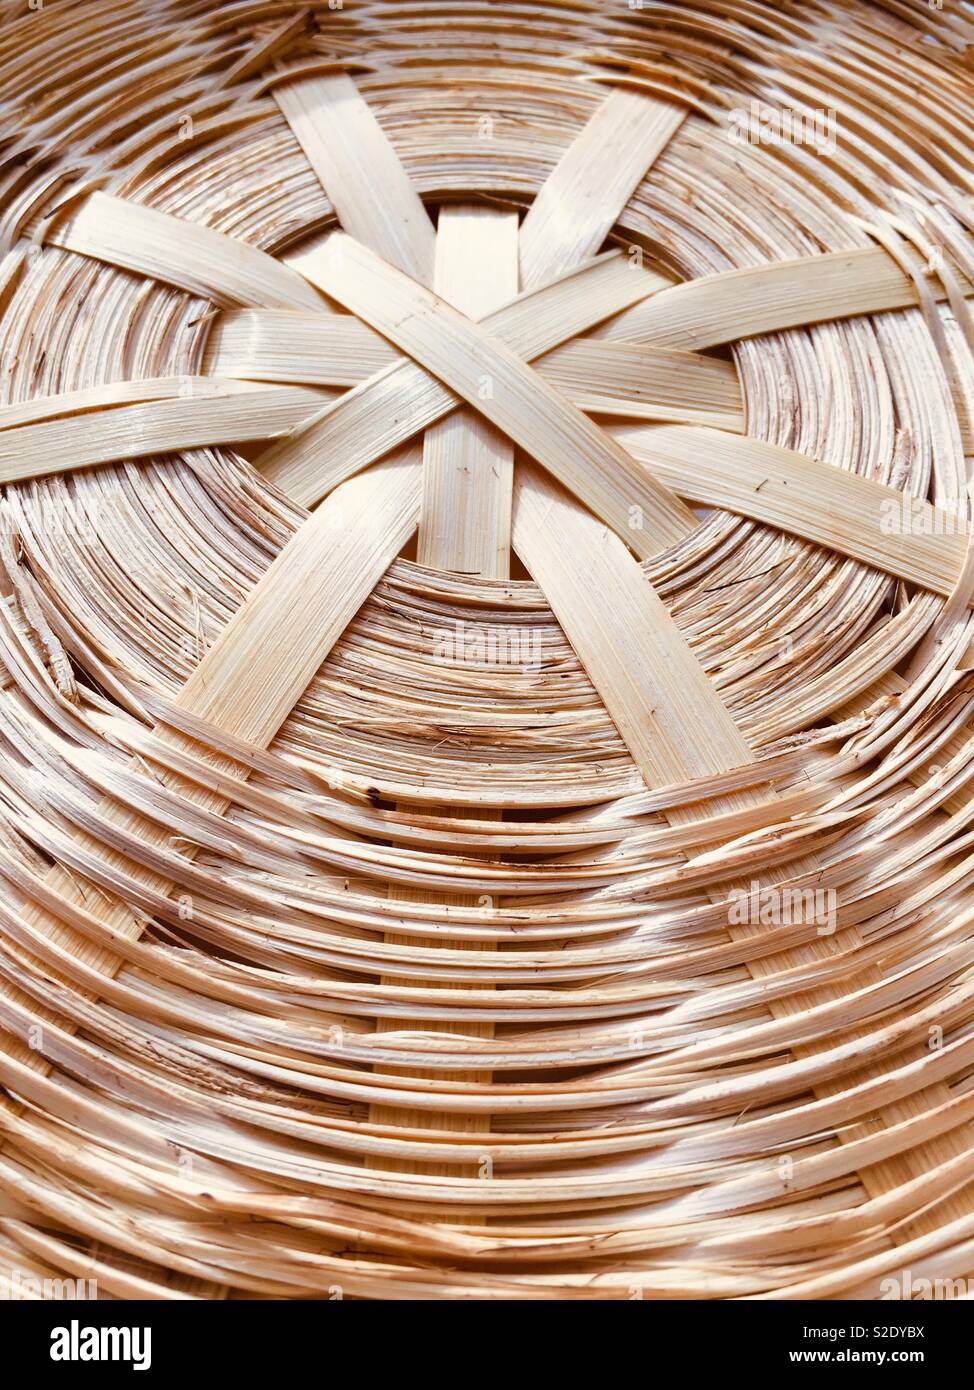 Straw basket - natural texture, circular, round form Stock Photo